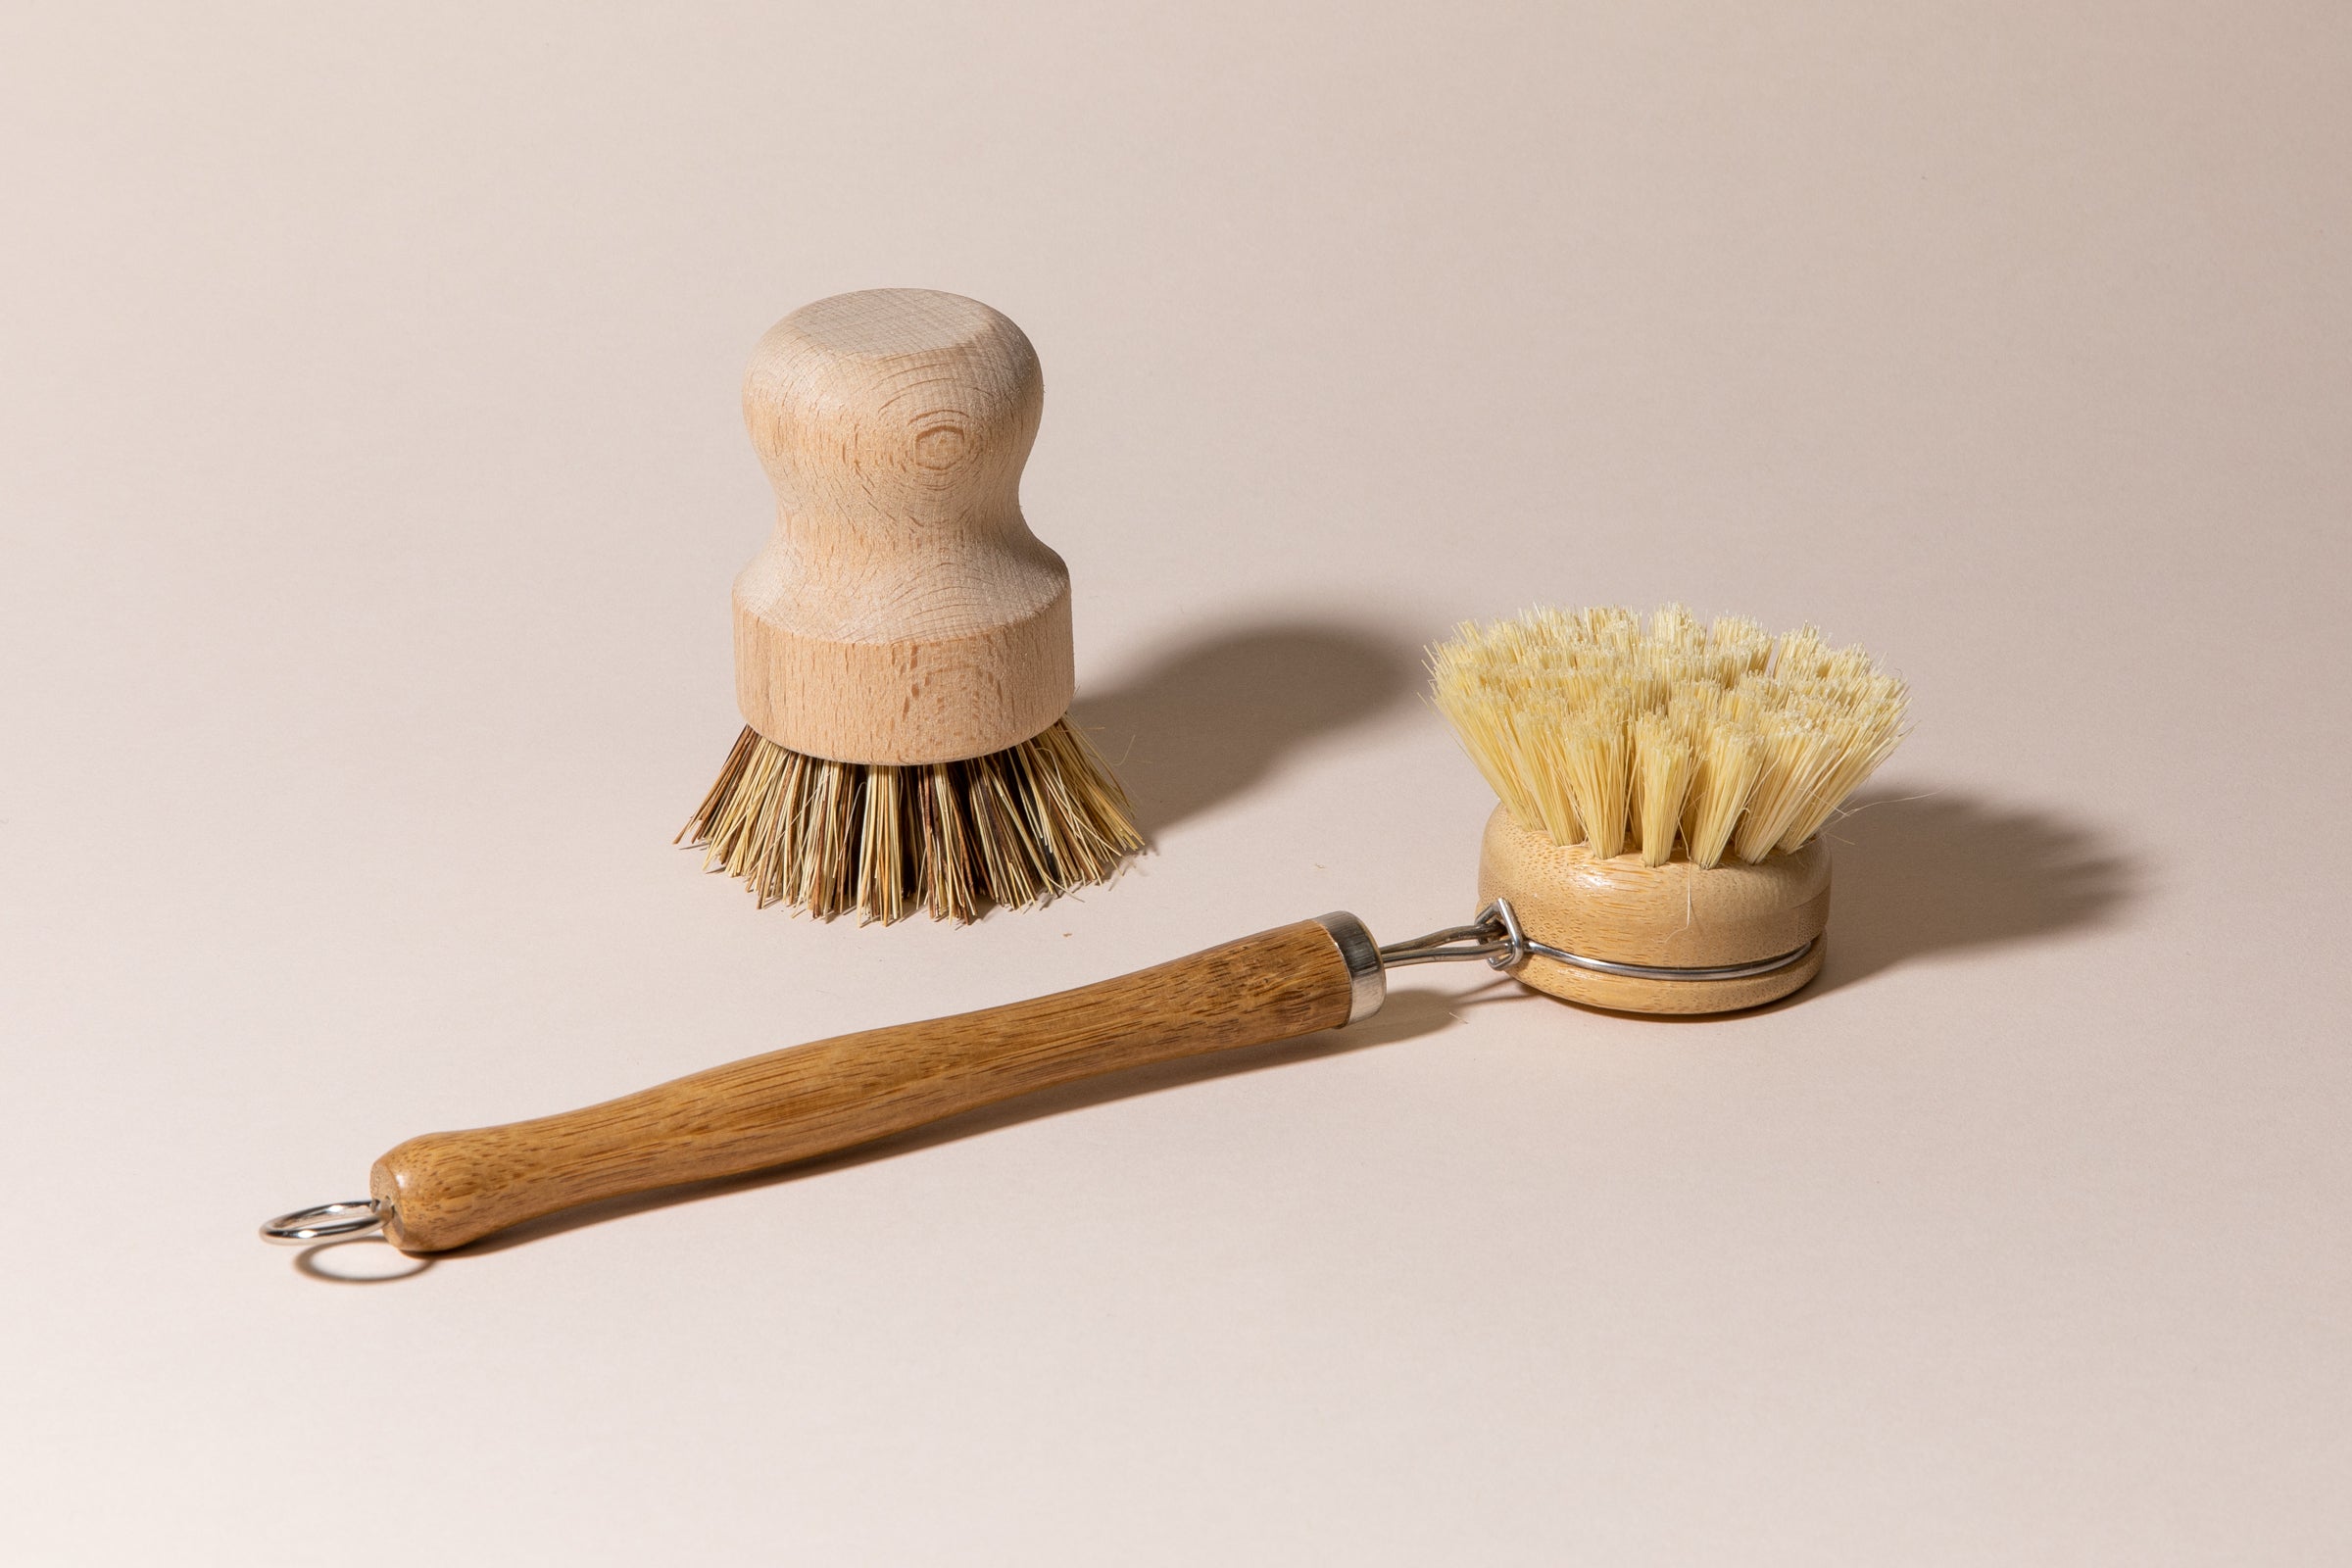 Zero Waste Dish Brush Kit – For Days